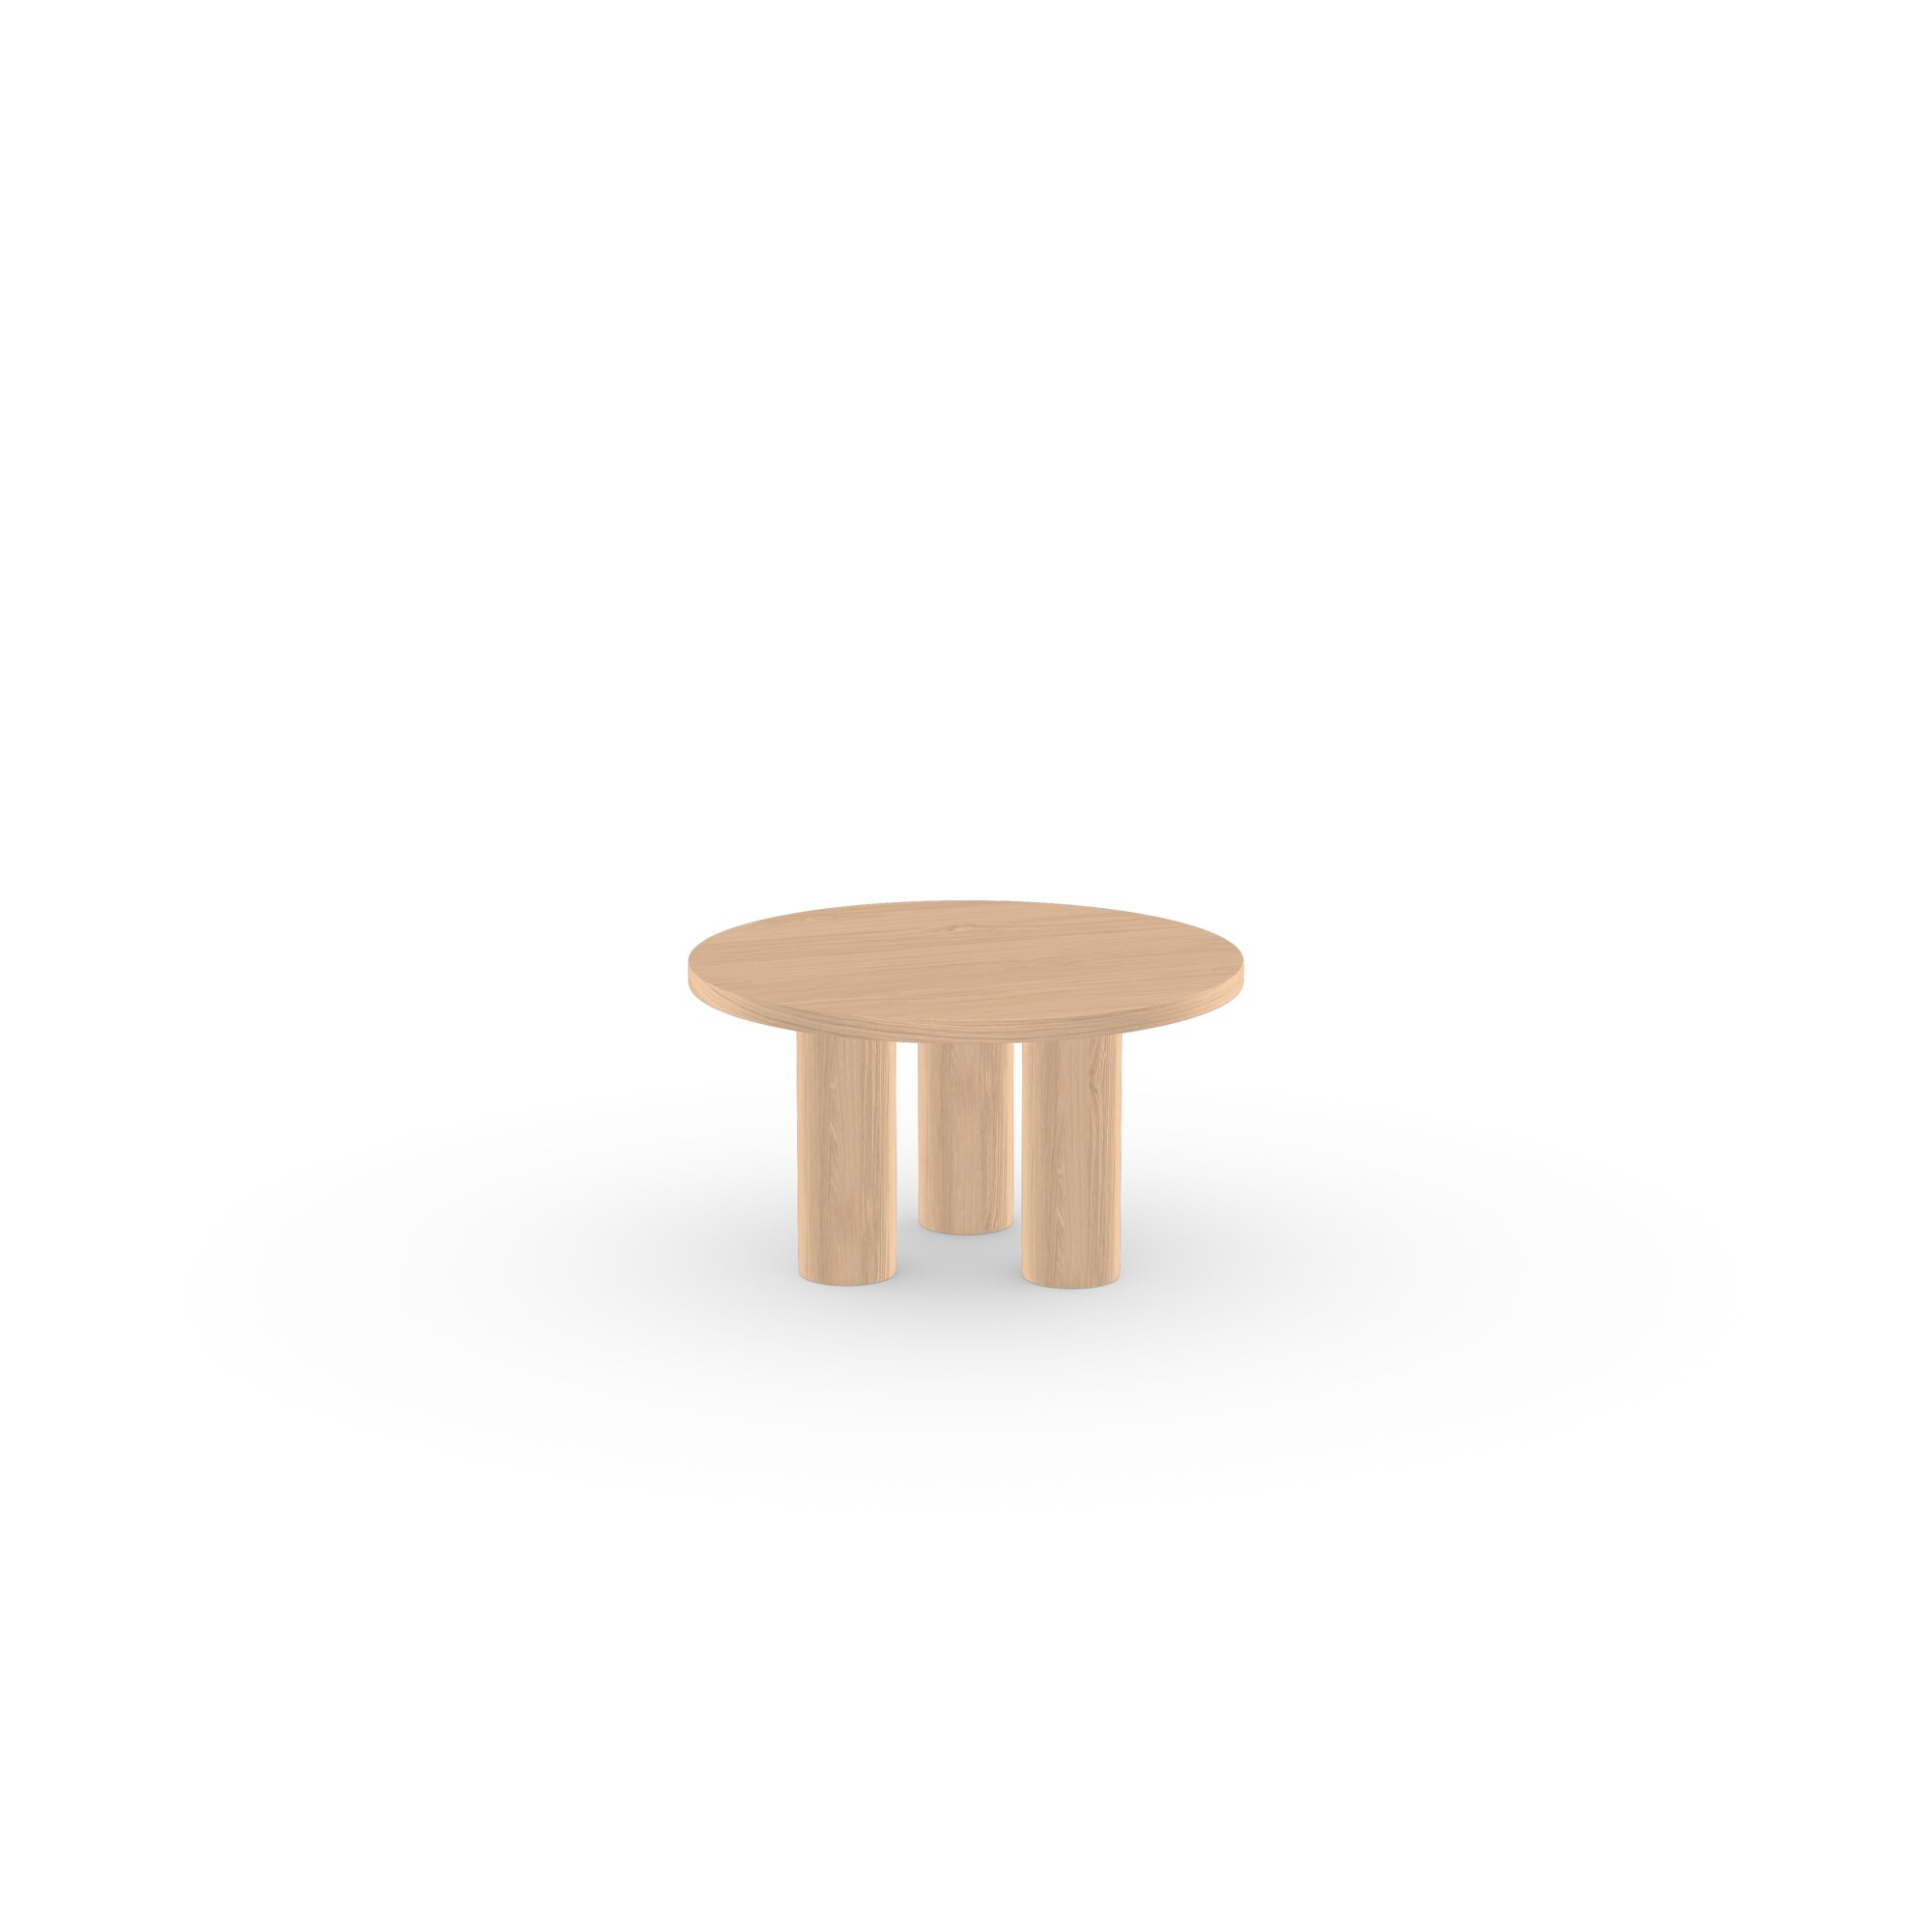 Design Coffee Table | Pillar Coffee Table round 70 Oak hardwax oil natural light 3041 | Oak hardwax oil natural light 3041 | Studio HENK| 